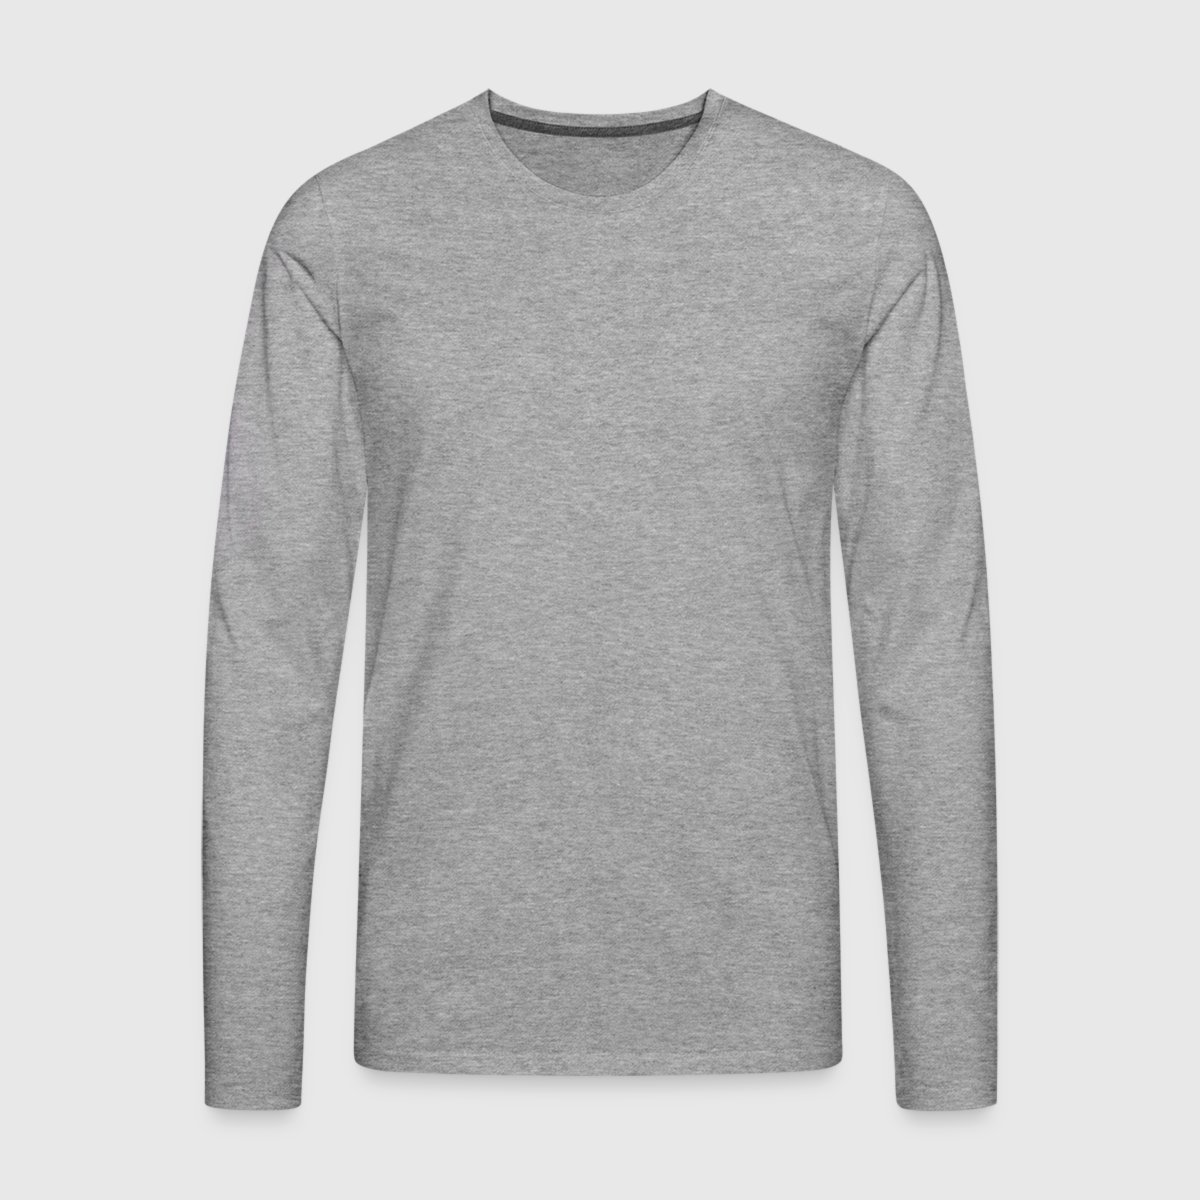 Men's Premium Longsleeve Shirt - Front